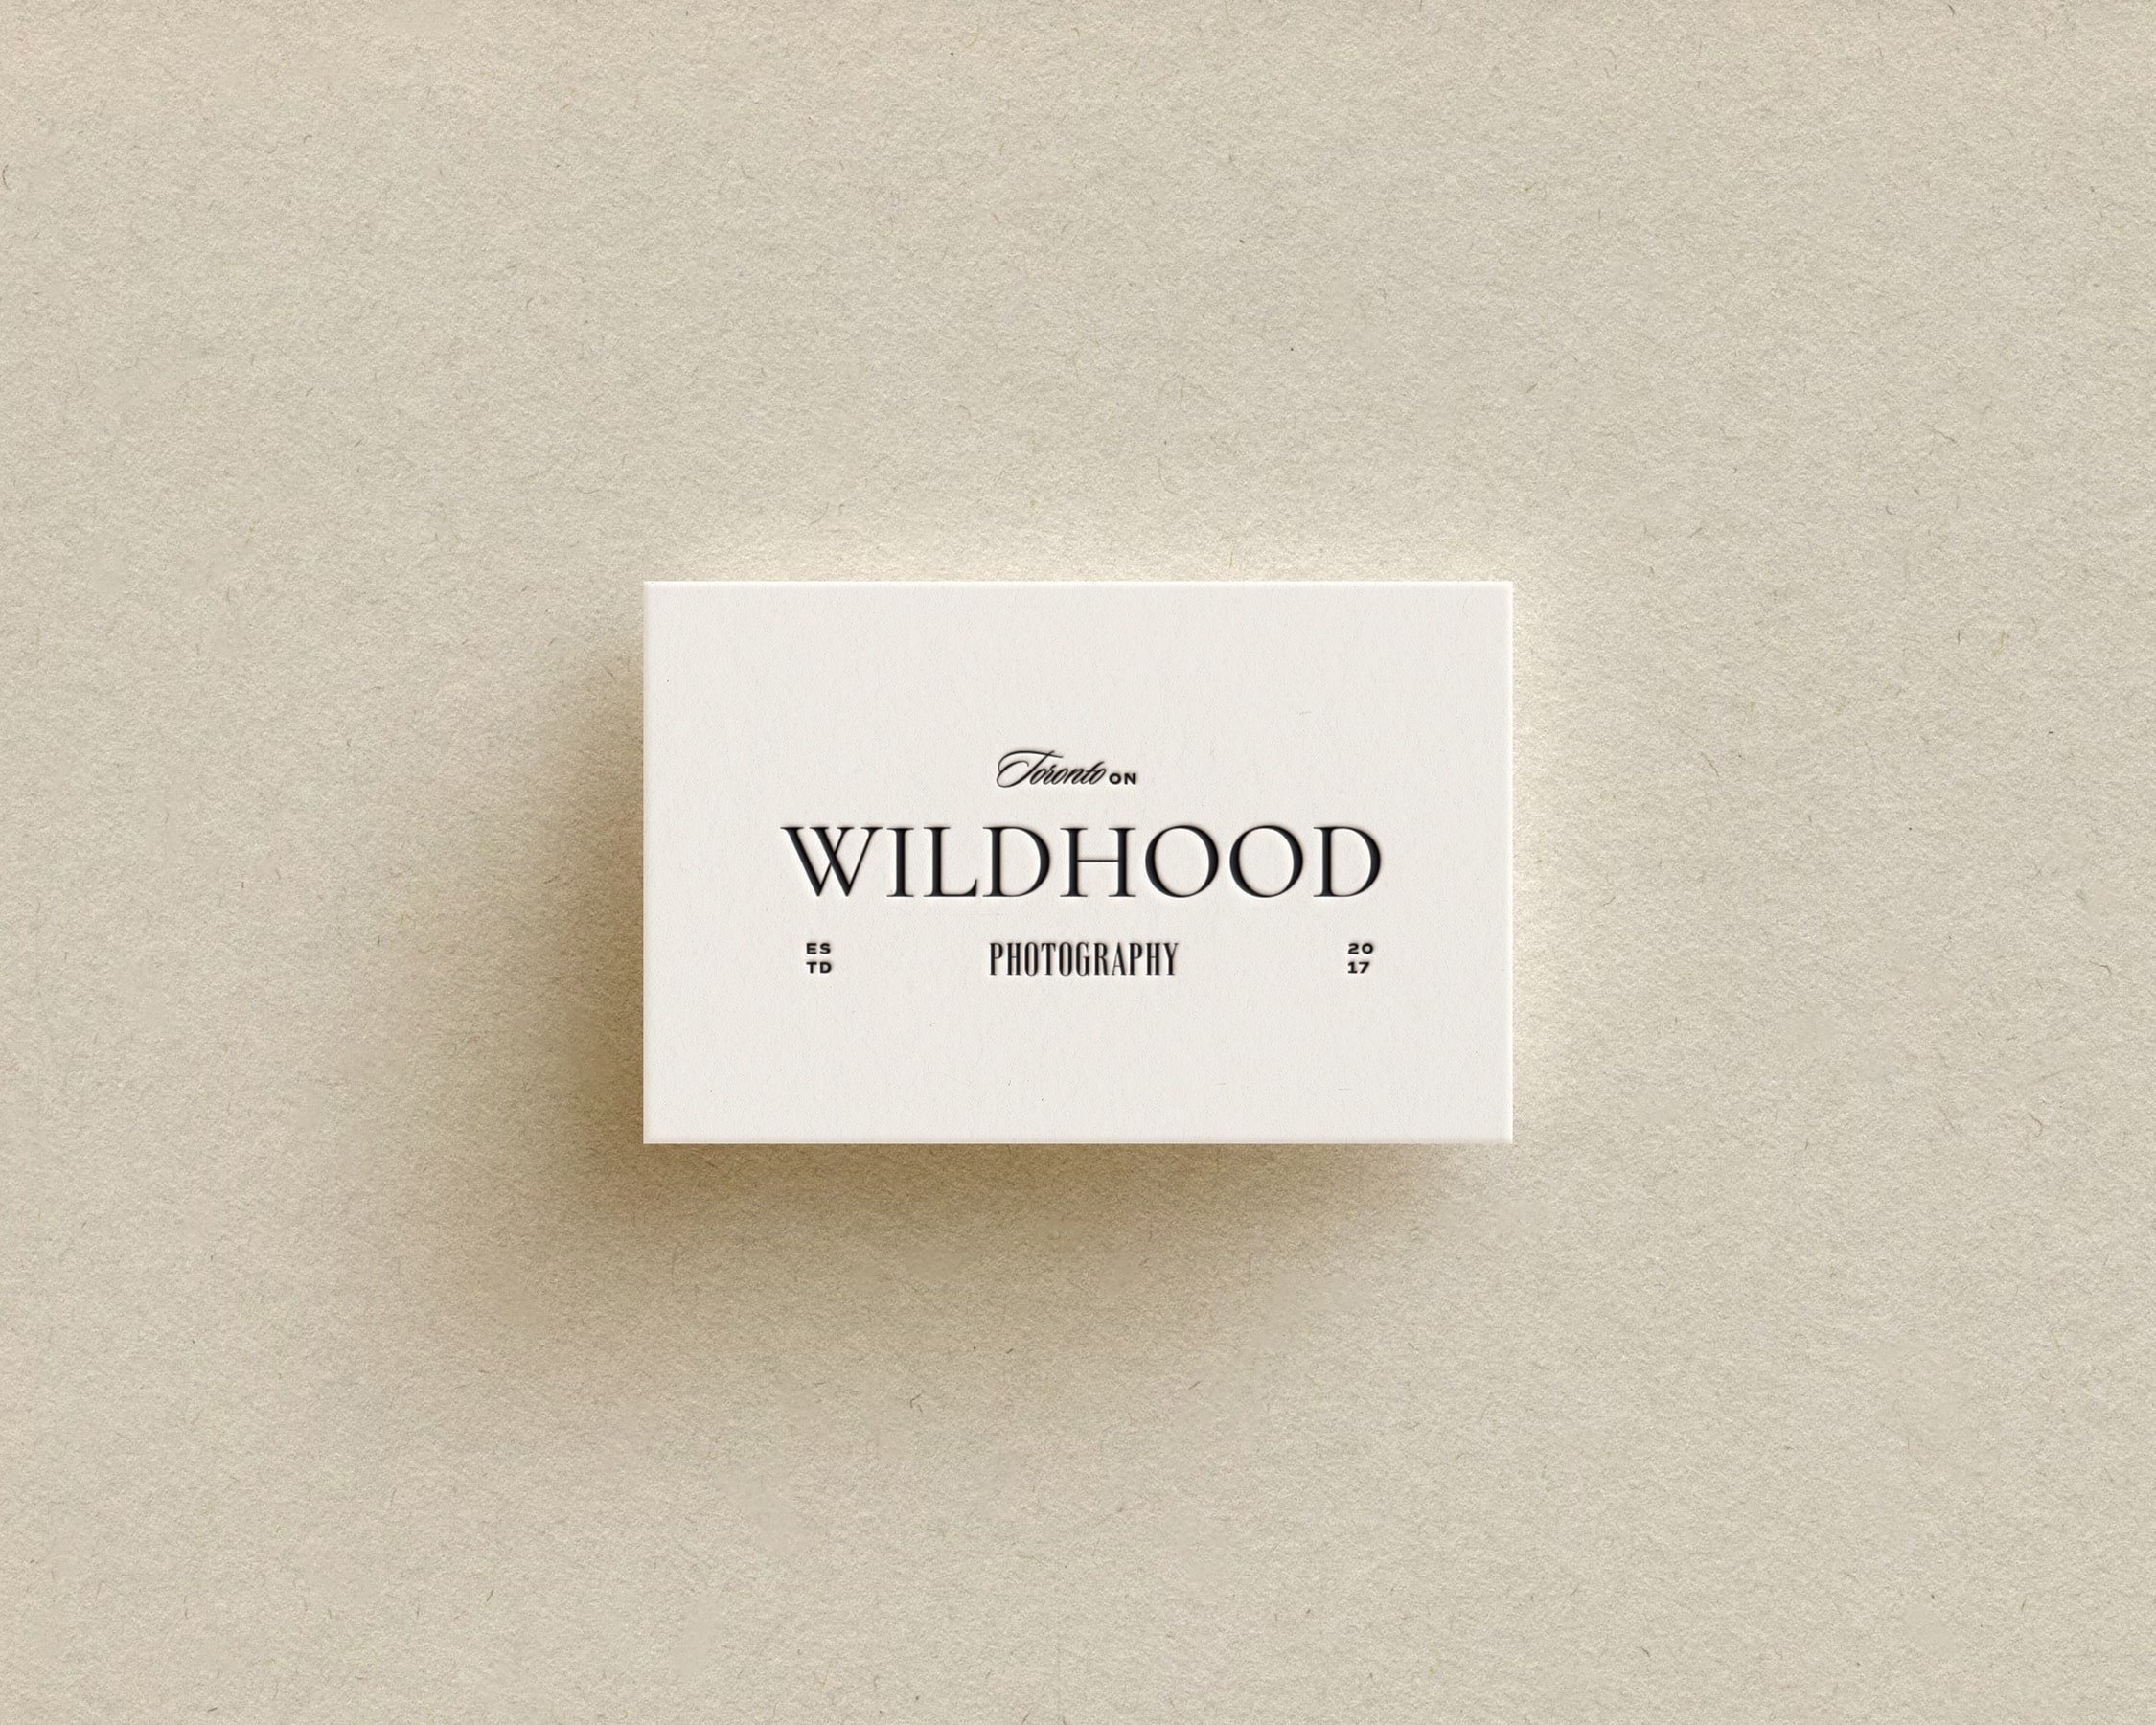 Wildhood-businesscard-WEB-min.jpg